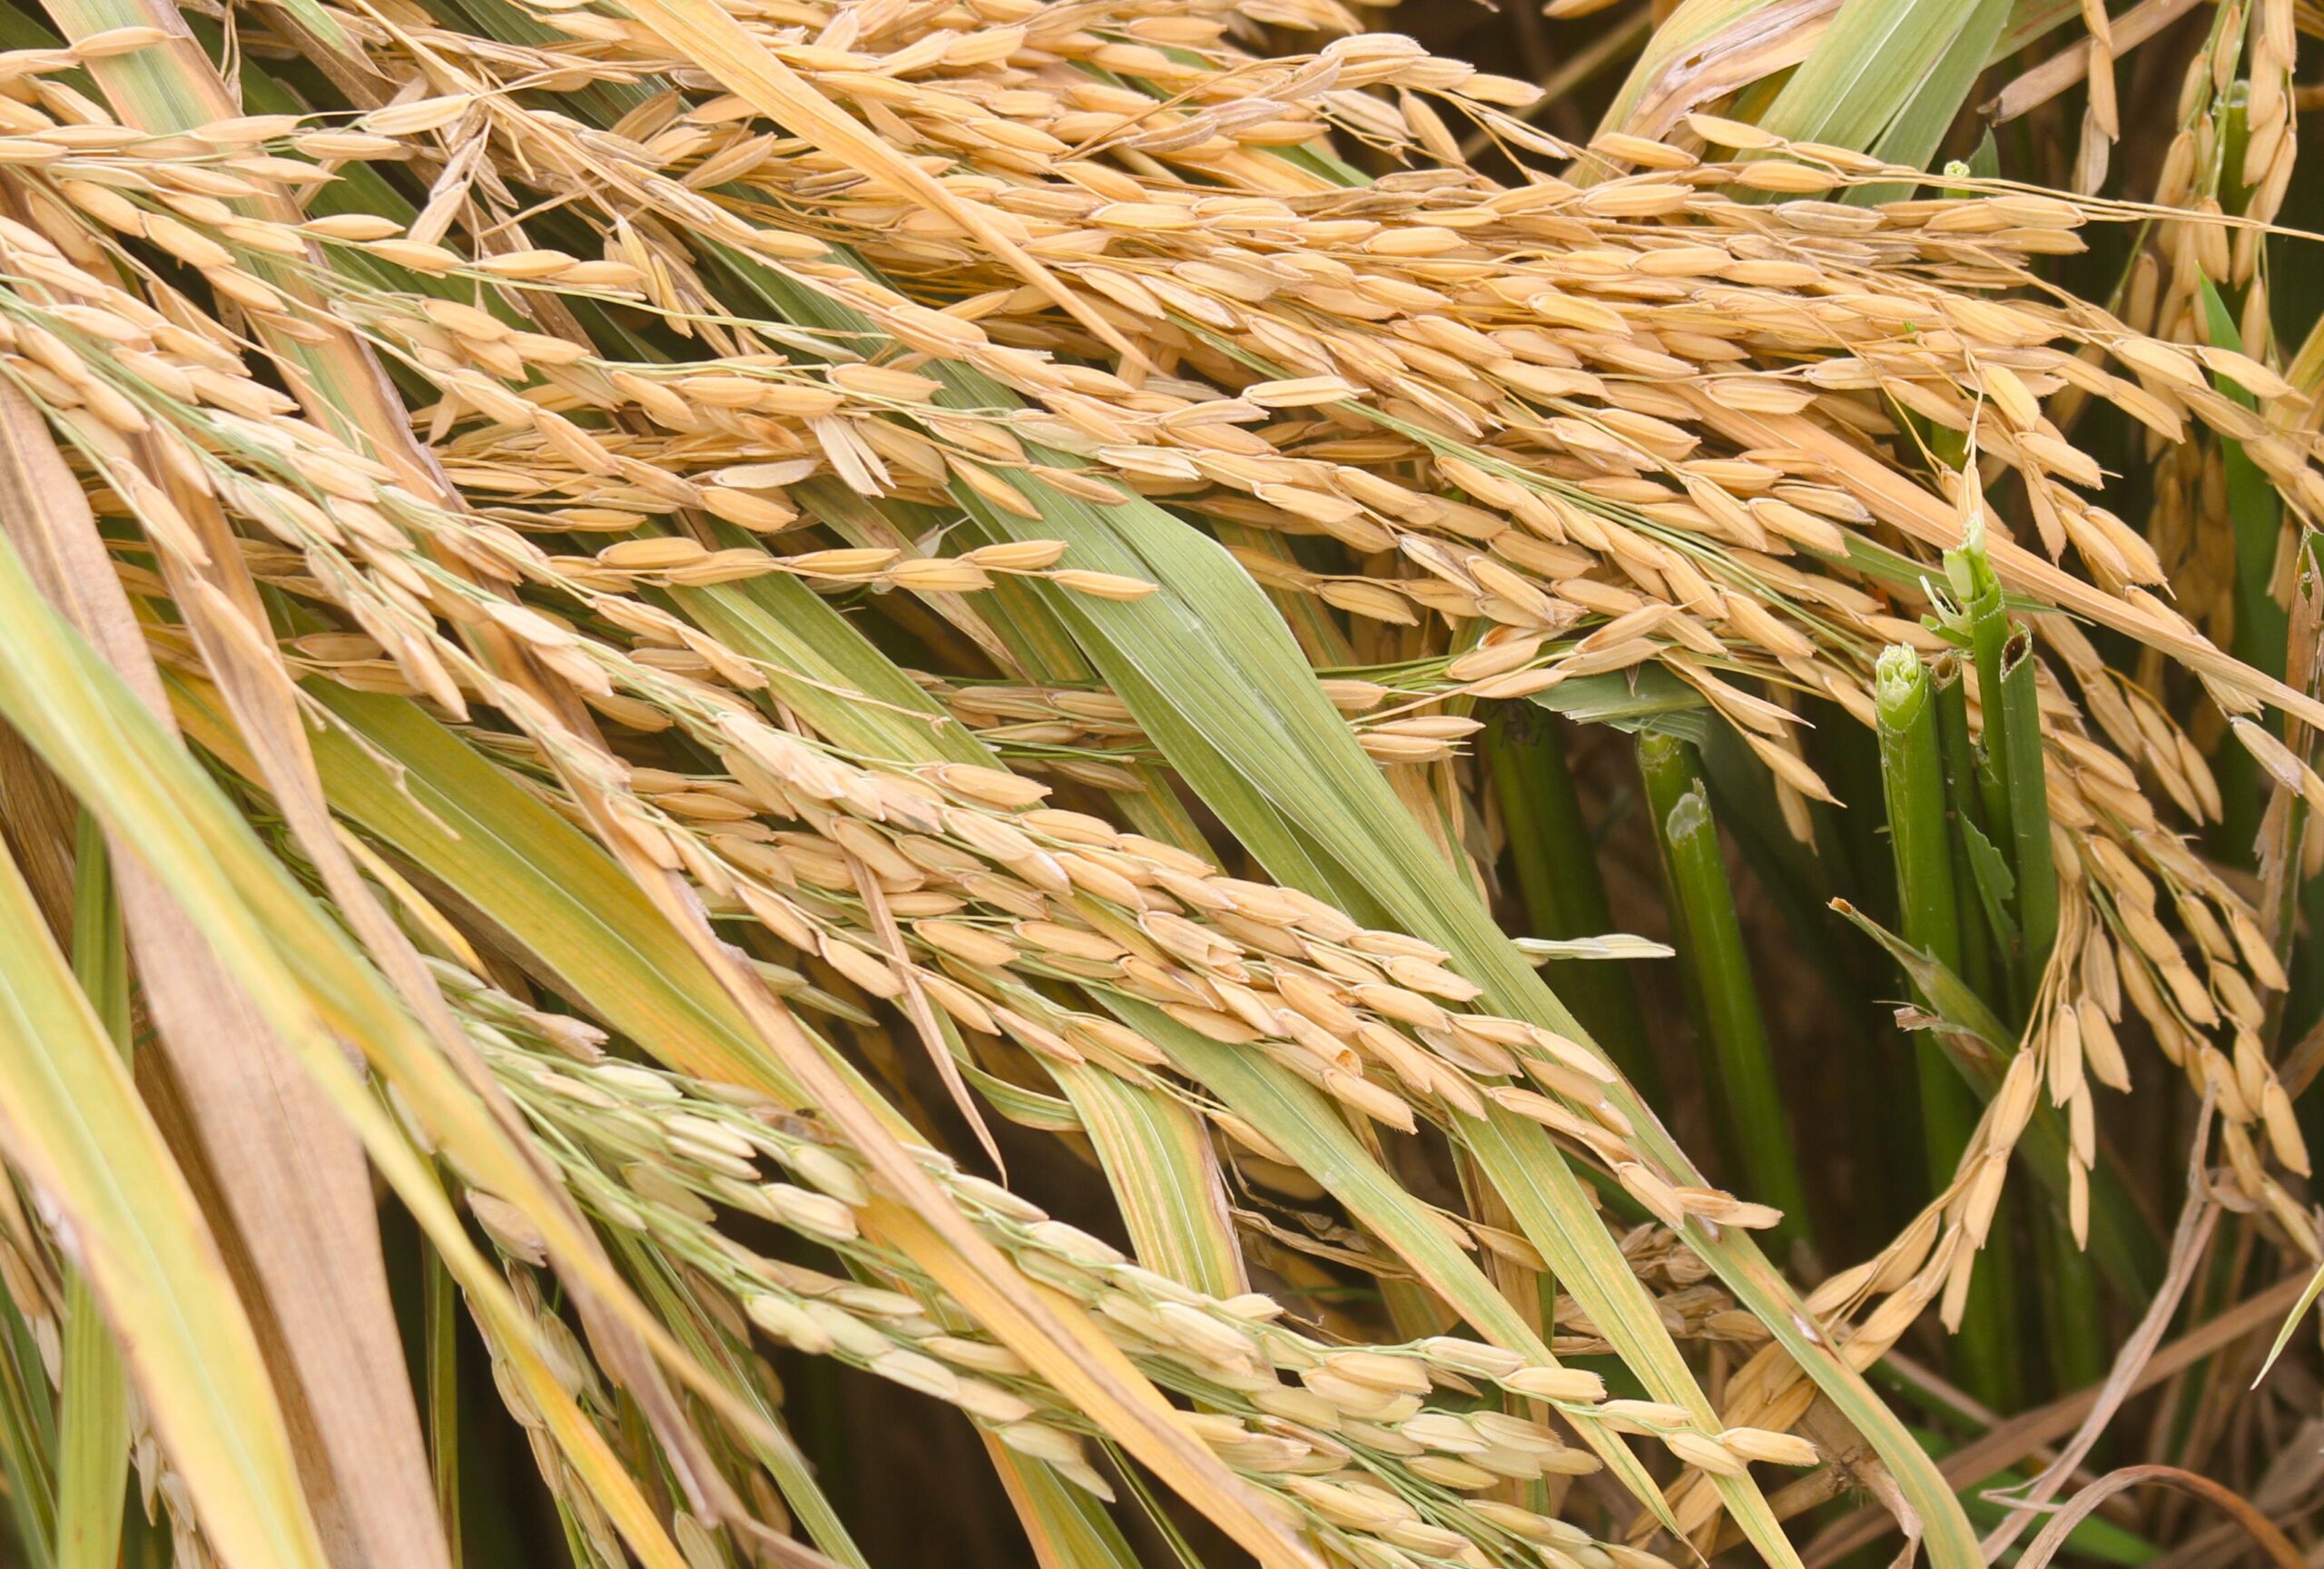 Padi yang terserang penyakit tidak memiliki bulir beras salah satu penyebabnya adalah kekurangan nutrisi dan air Chairil AqshaLensakitacom